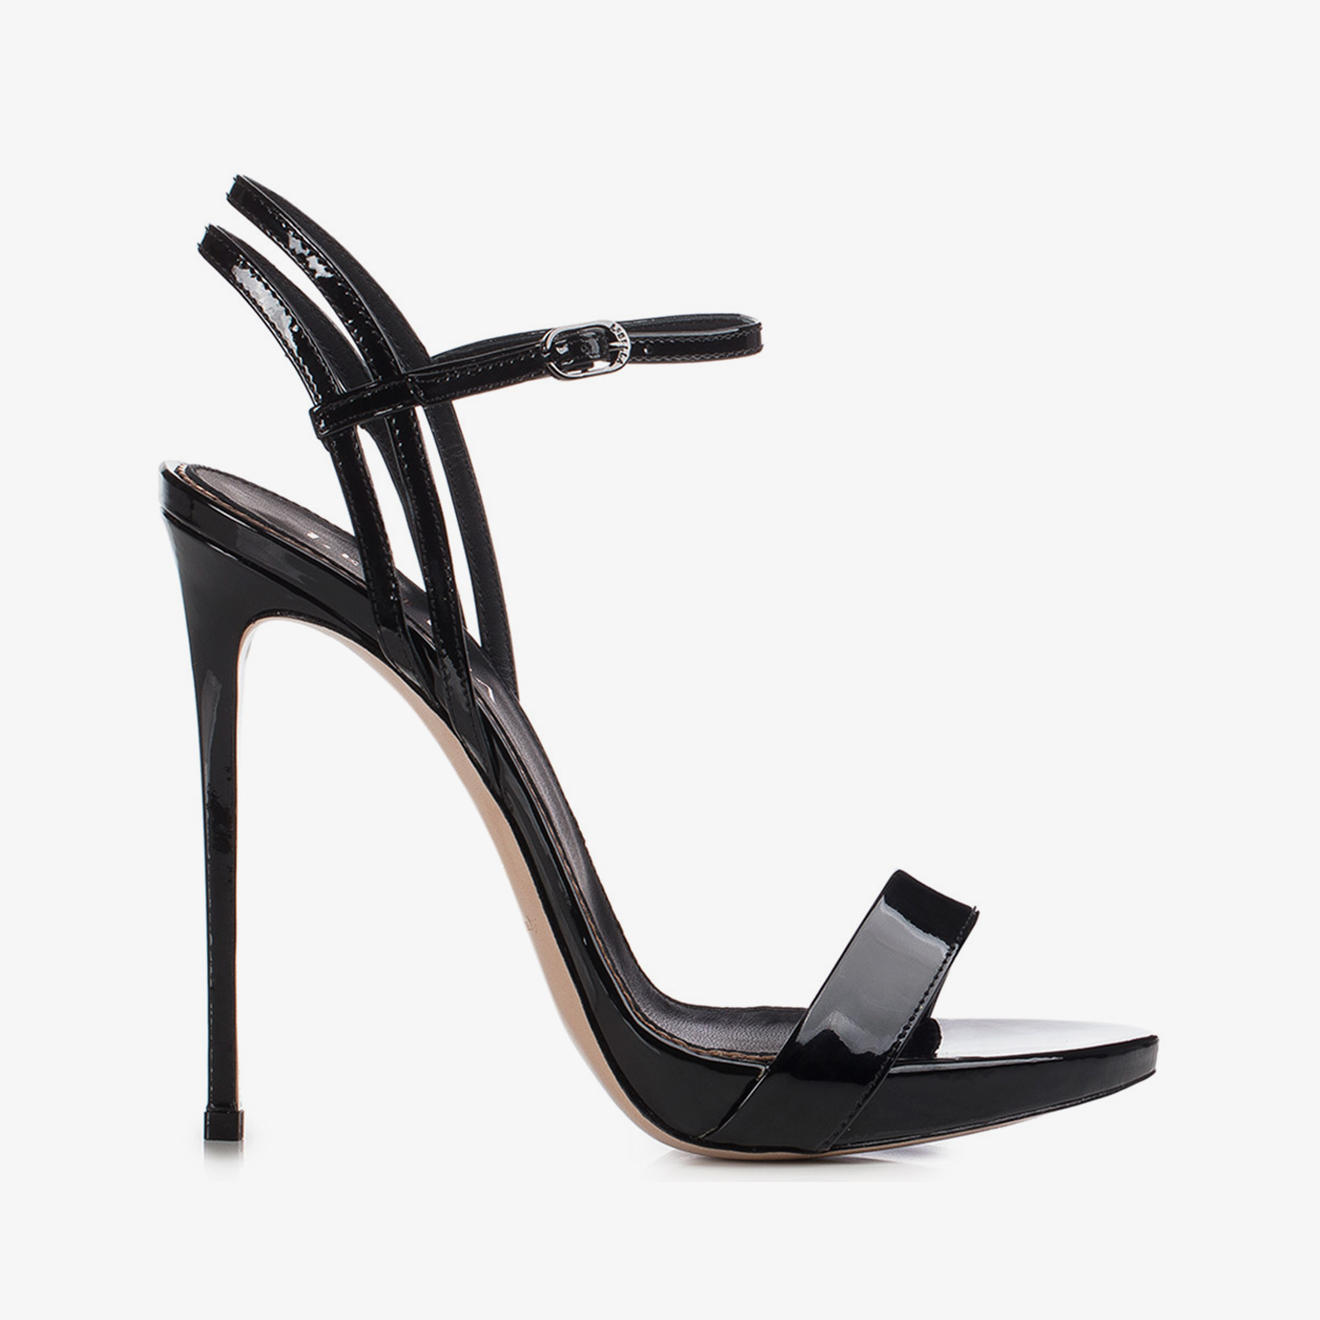 Black patent leather sandal - Le Silla